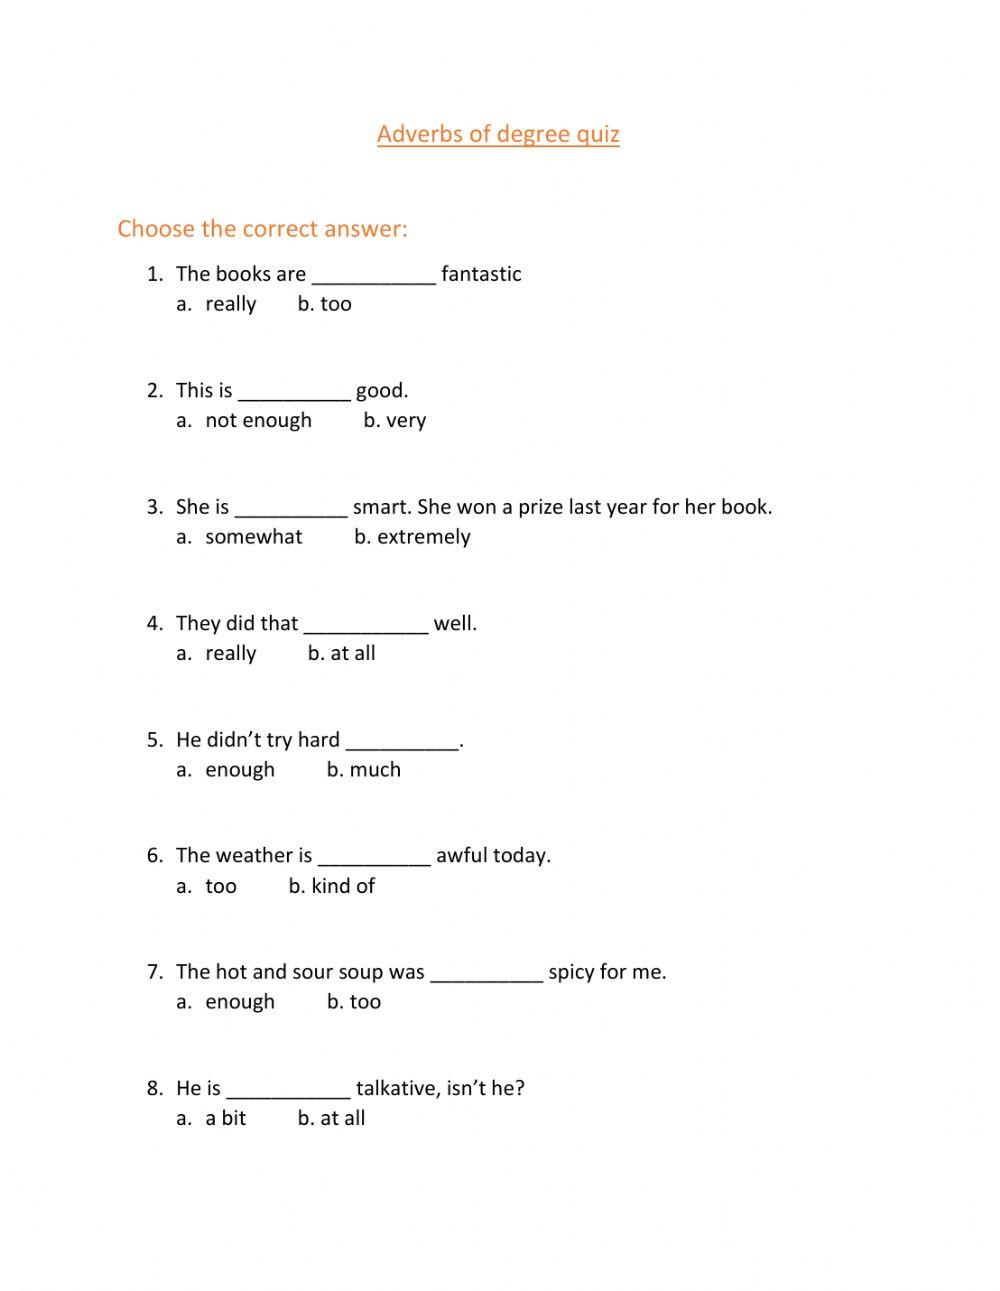 Adverbs of degree quiz